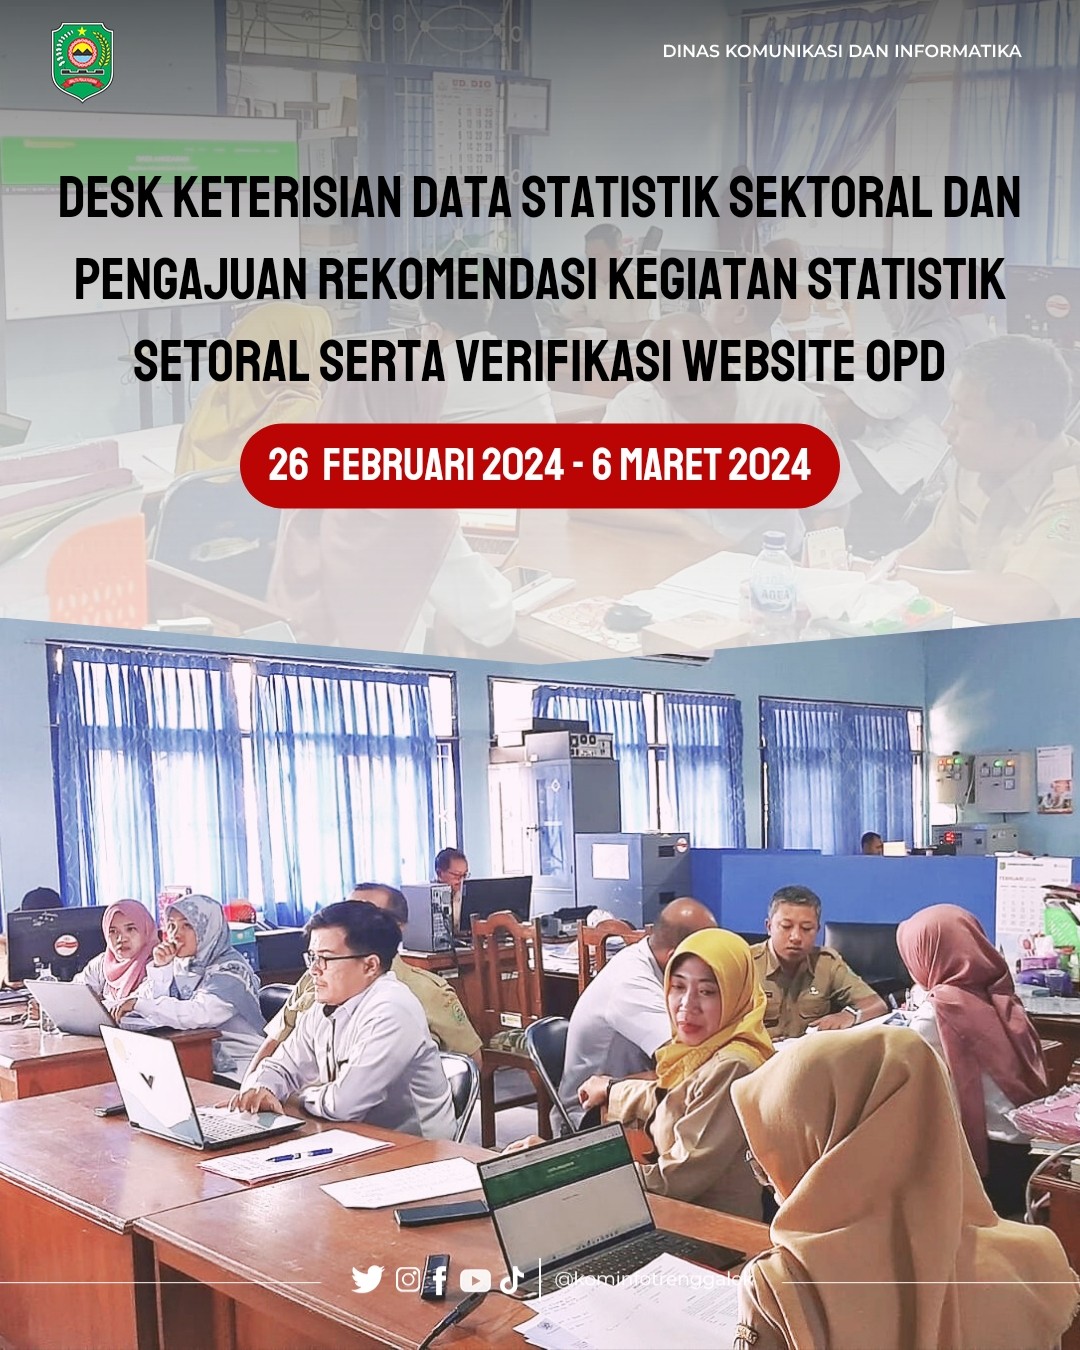 Desk Keterisian Data Statistik Sektoral dan Pengajuan Rekomendasi Kegiatan Statistik Sektoral Serta Verifikasi Website OPD